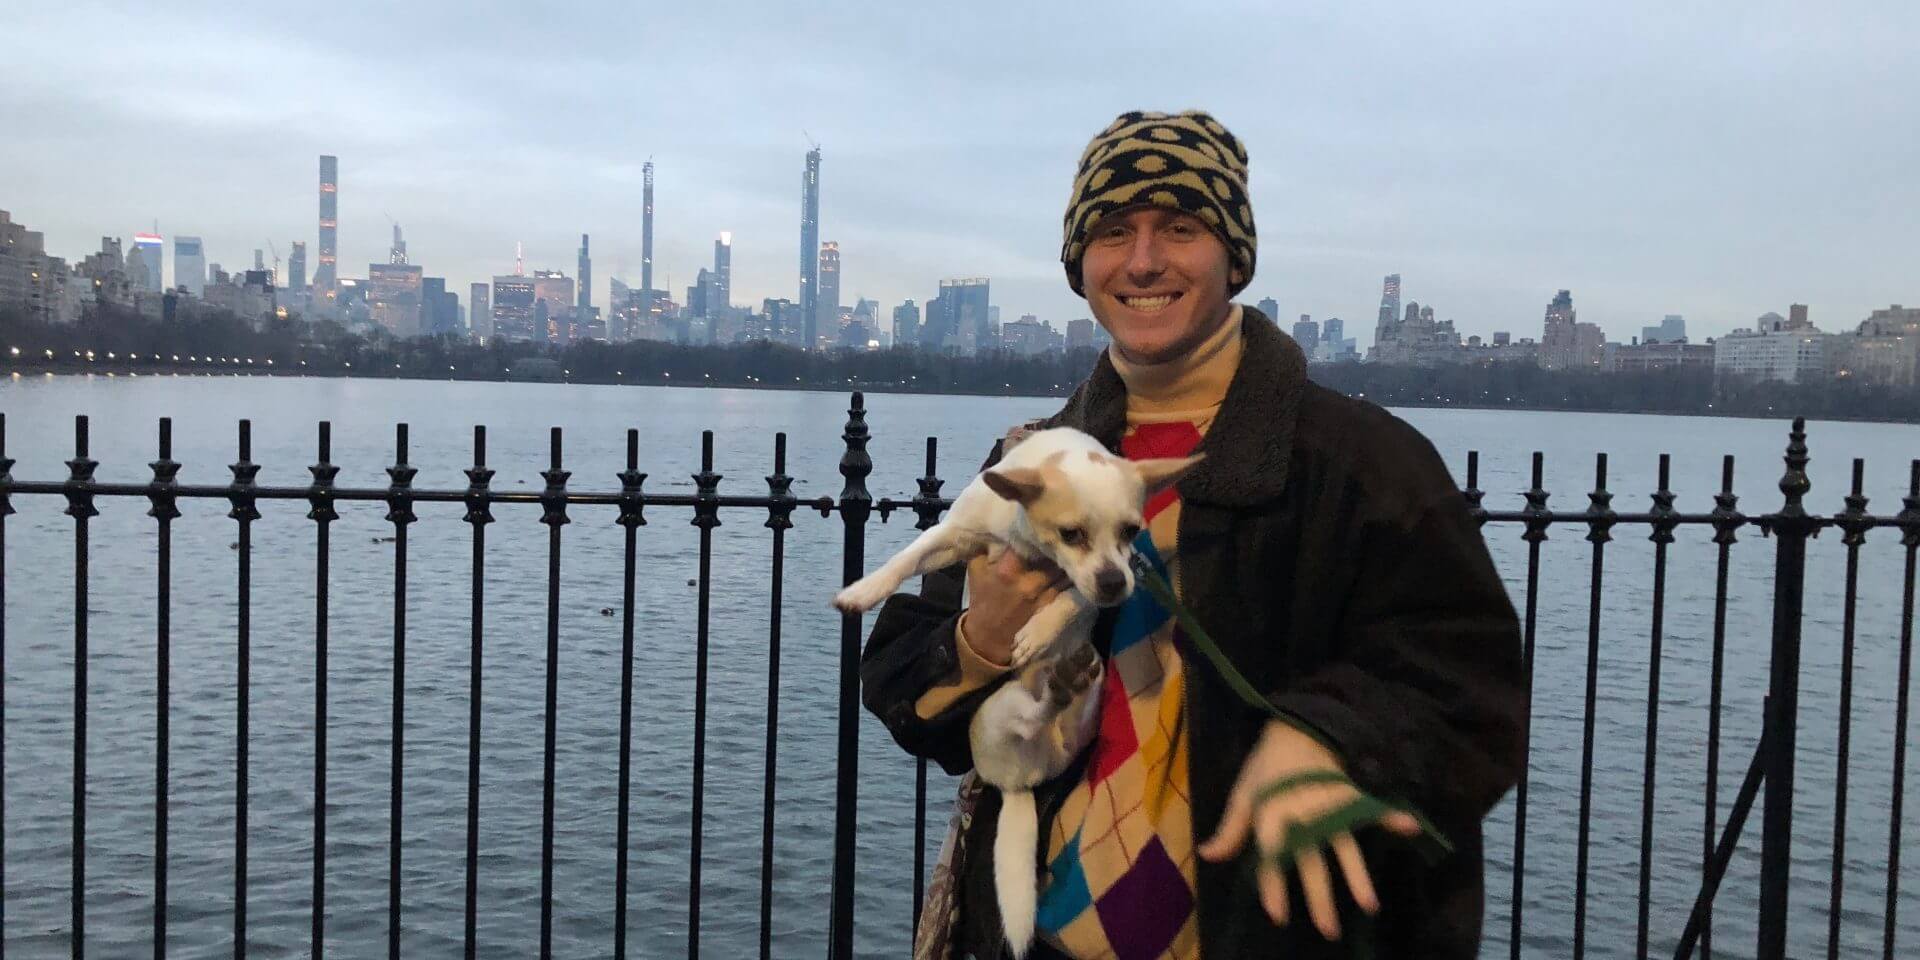 USC Viterbi Student Justin Totaro with his dog.